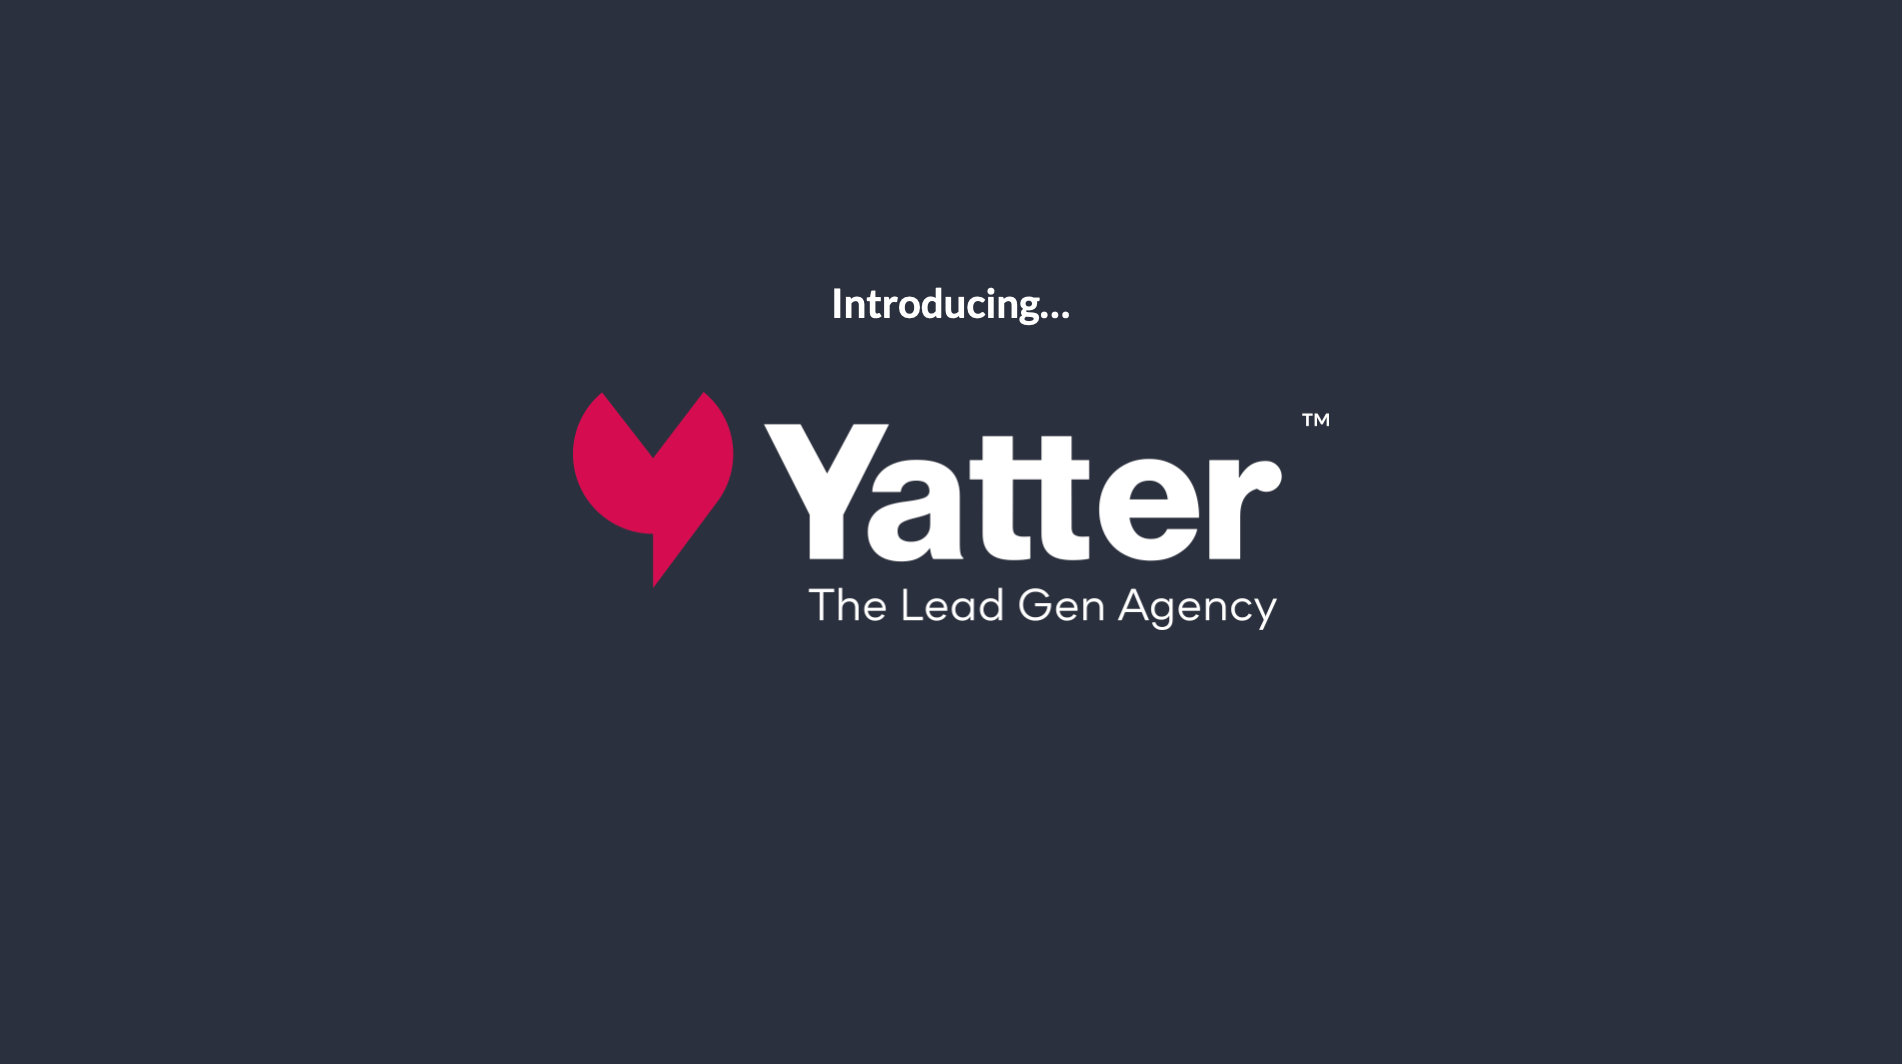 Introducing Yatter